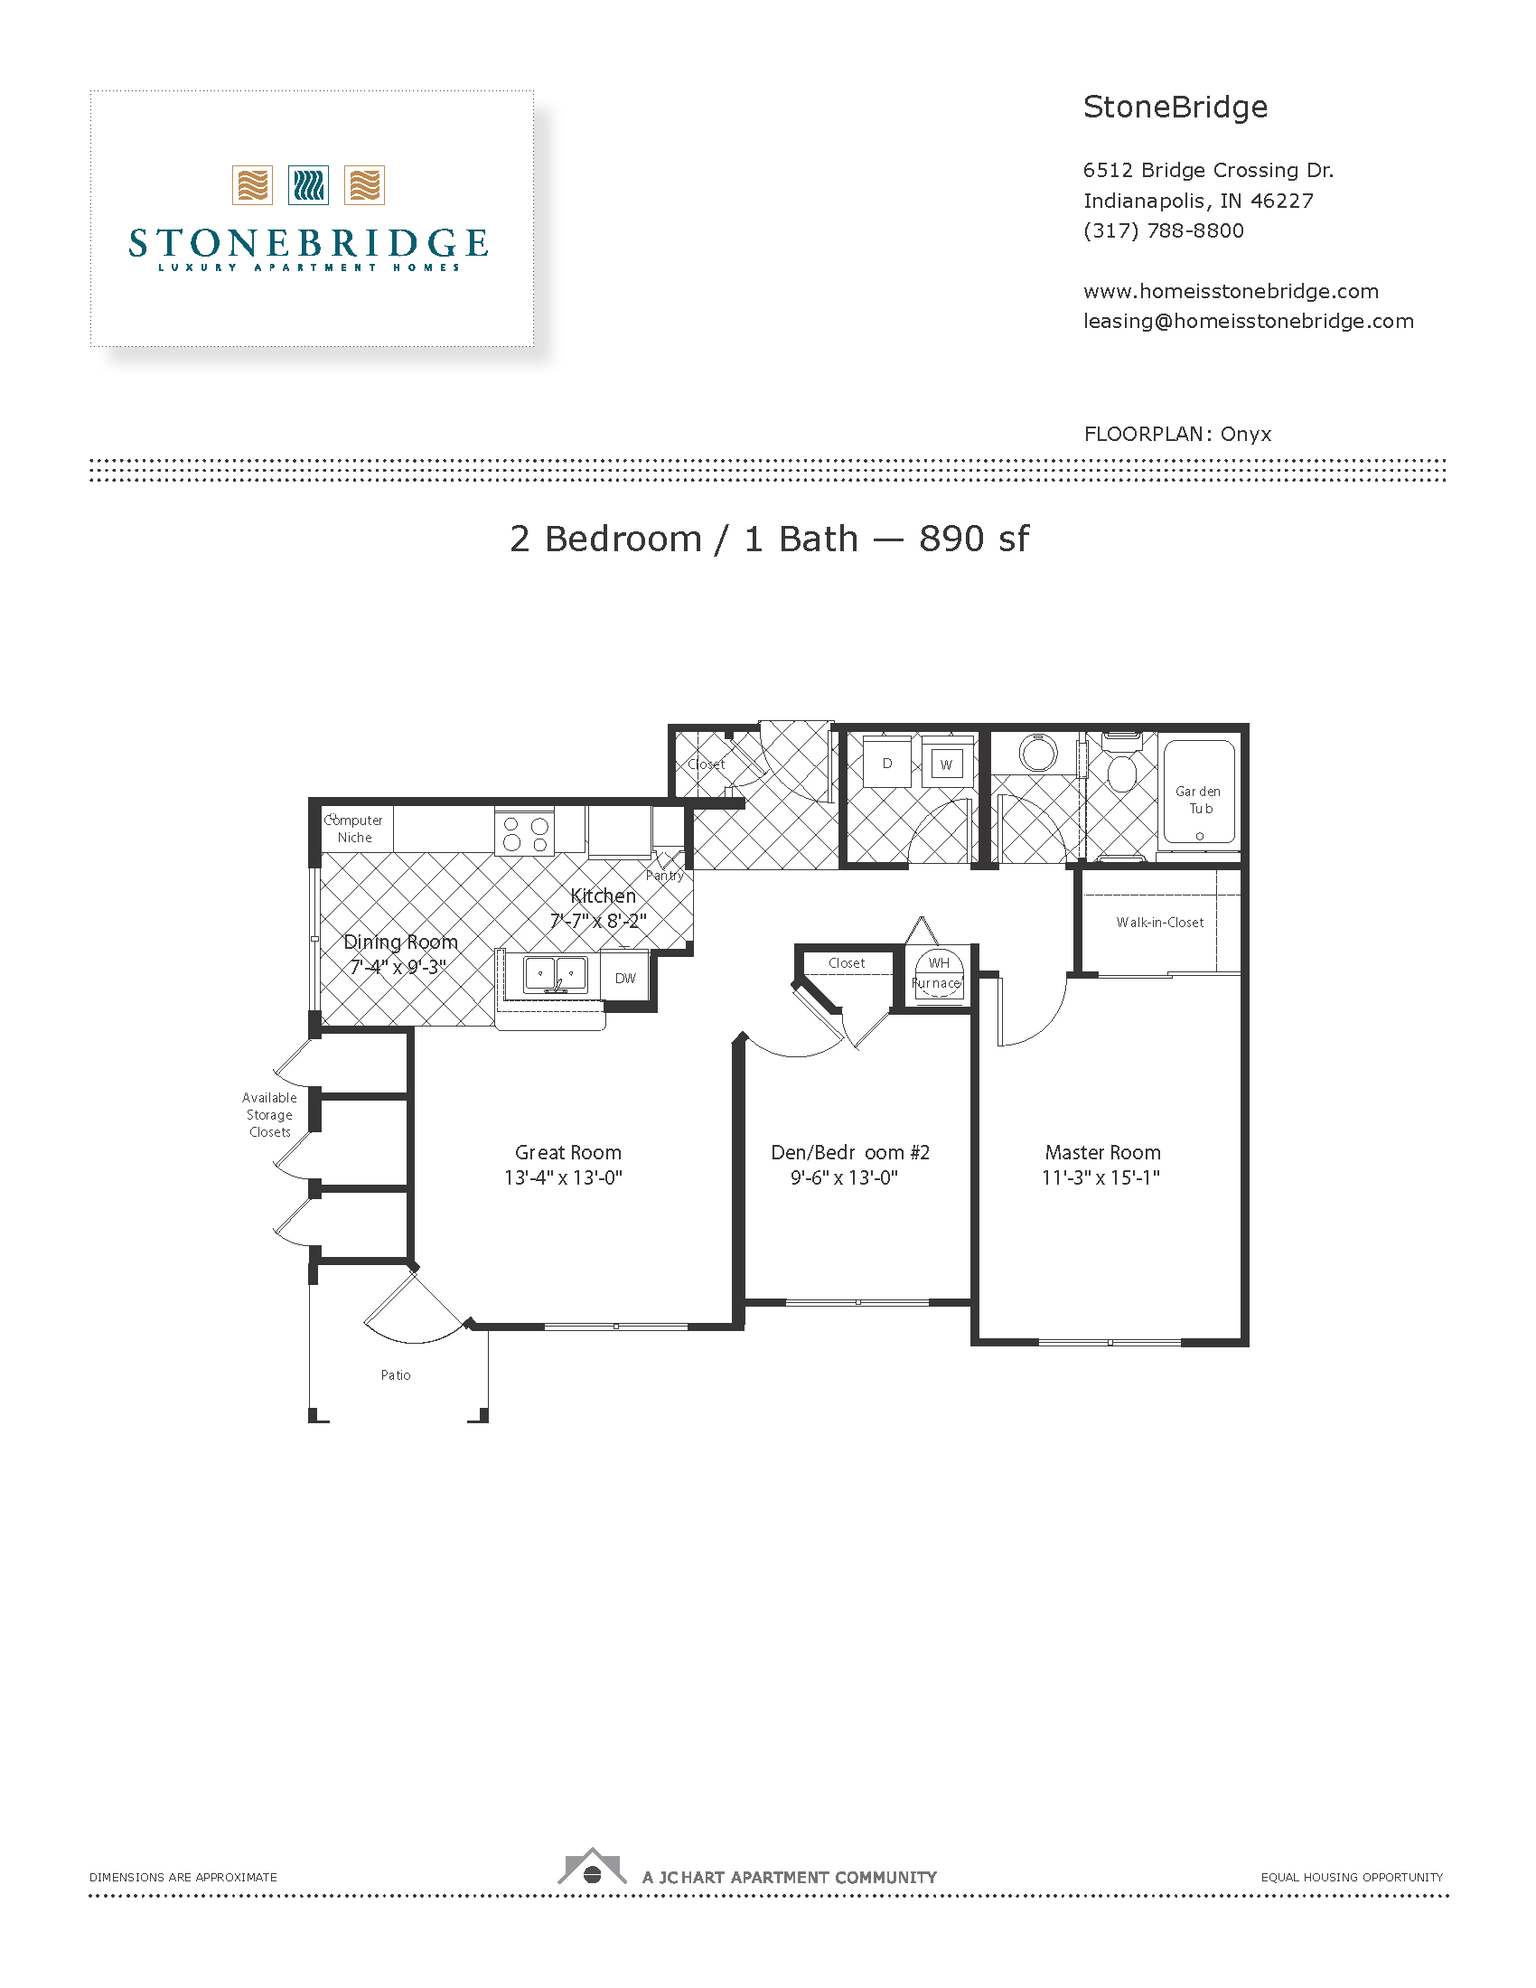 Onyx floor plan - StoneBridge Apartment Homes _ Indianapolis apartments_preview.png